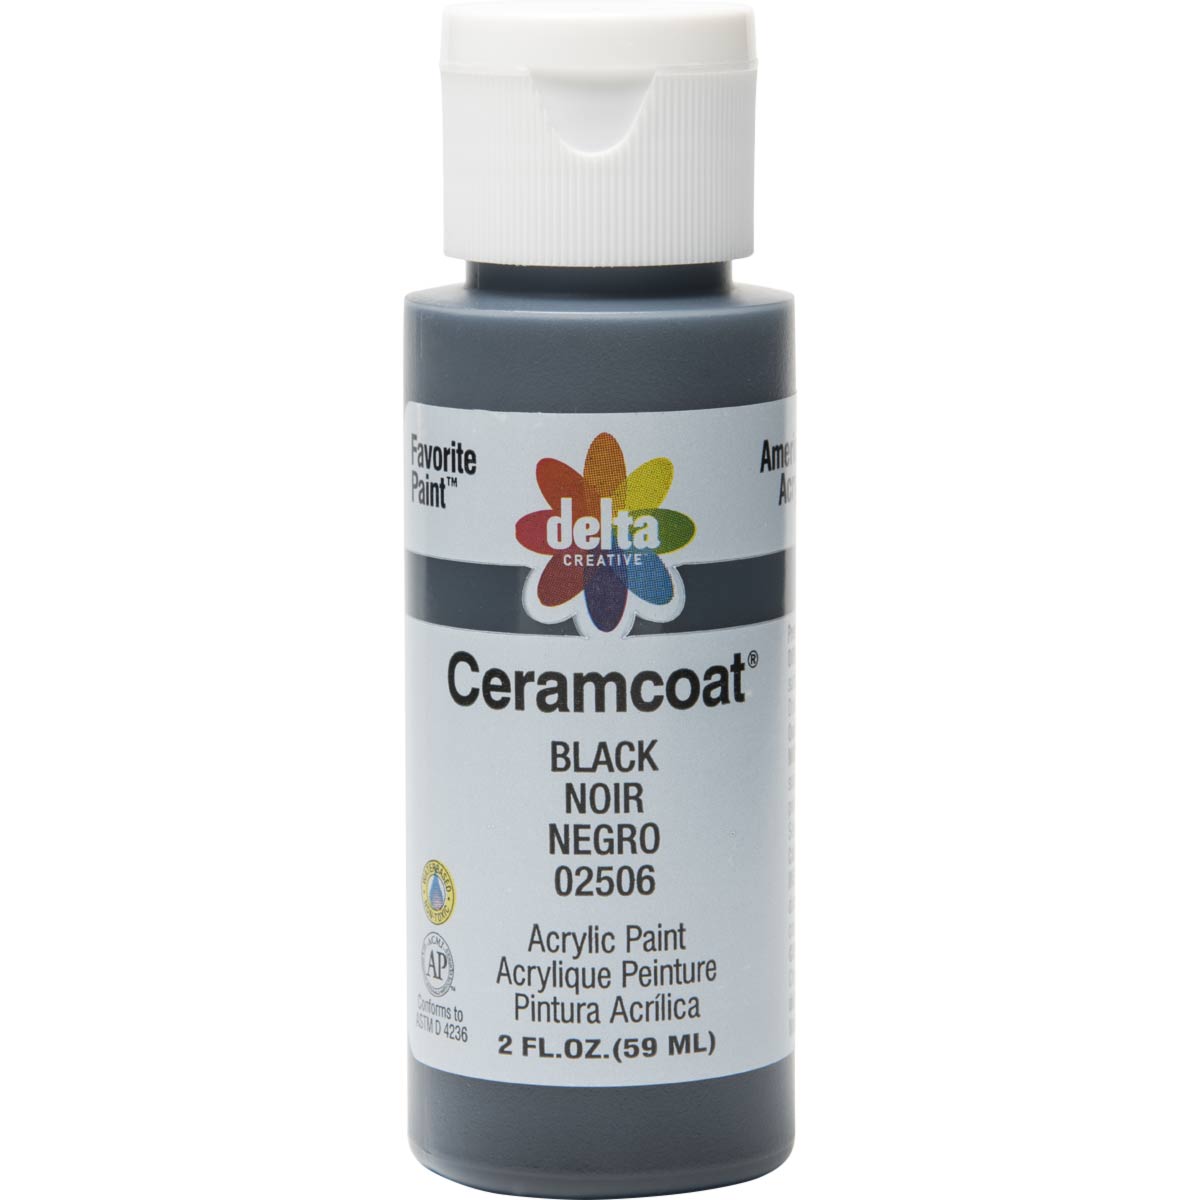 Delta Ceramcoat Acrylic Paint - Black, 2 oz. - 025060202W